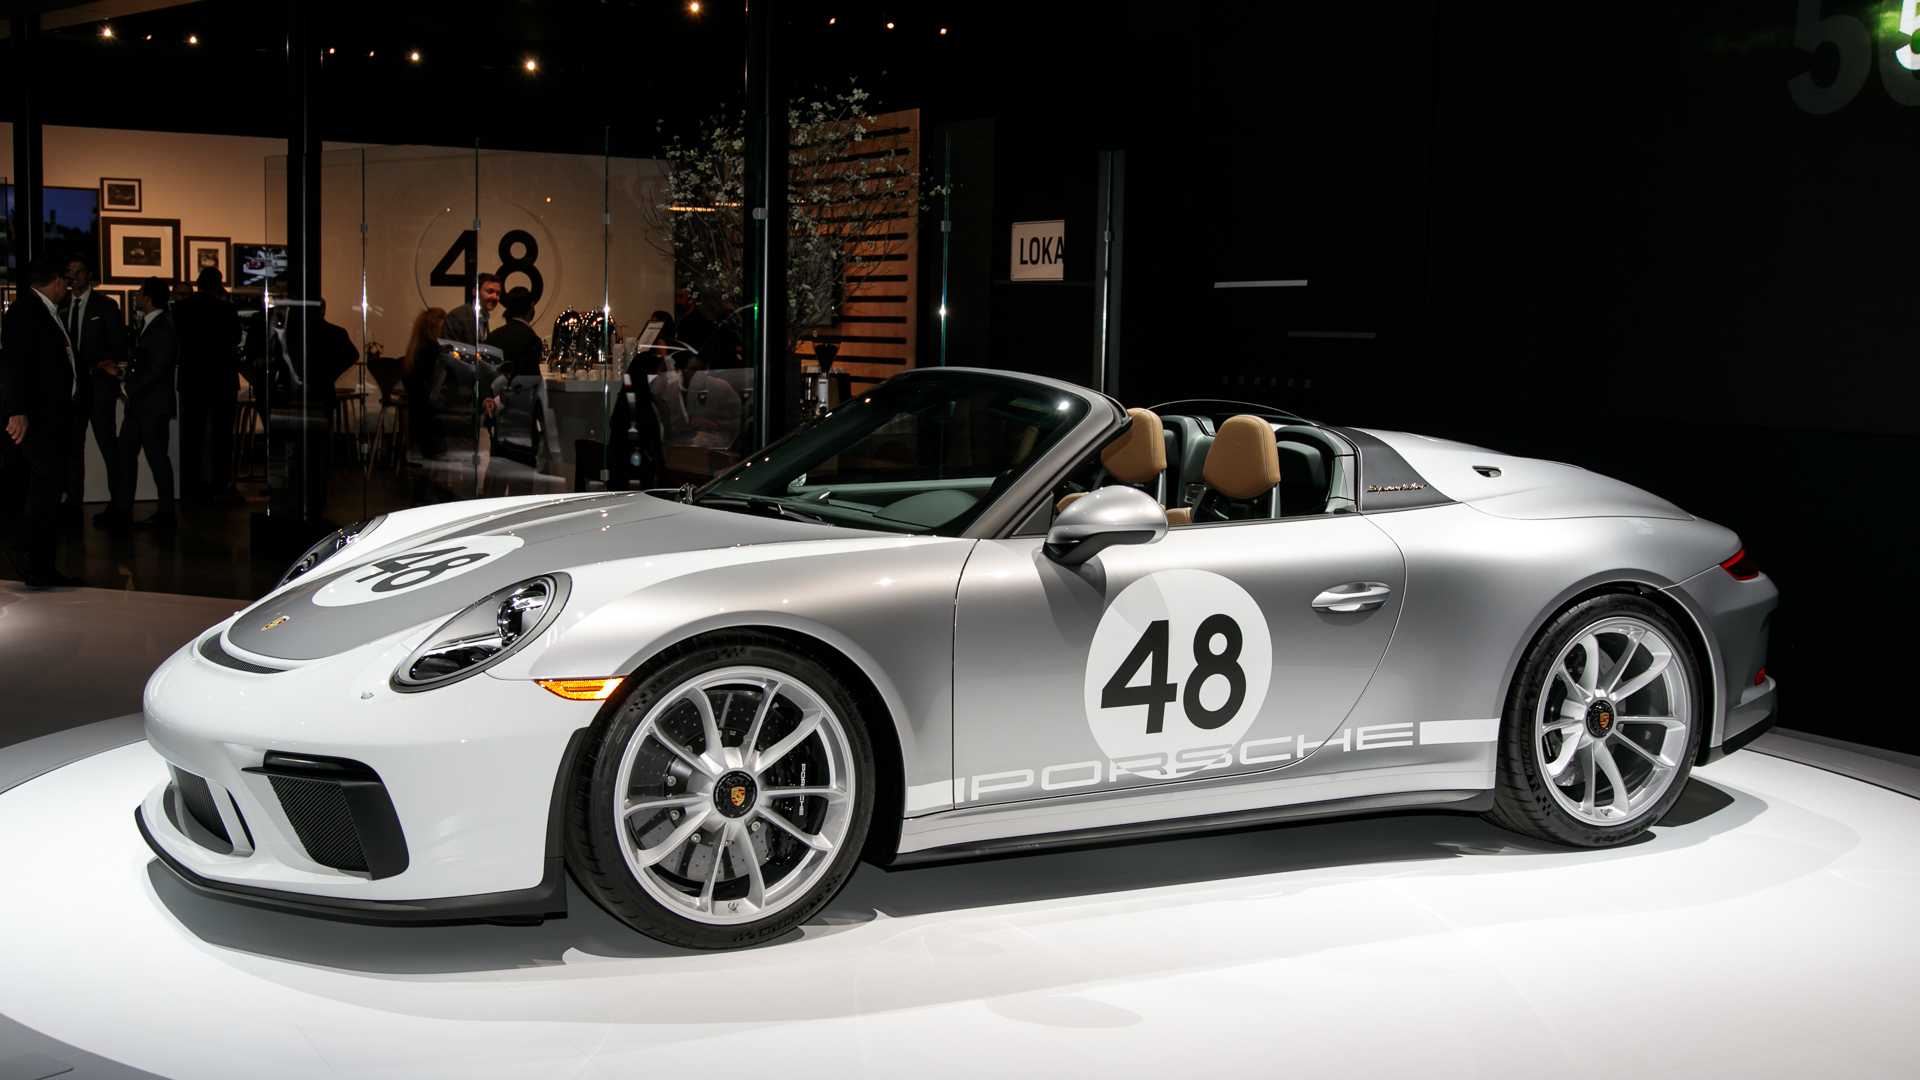 2019 porsche 911 speedster - پورشه 911 اسپیداستر 2019  در نمایشگاه نیویورک مجهز به موتور 502 اسب بخاری